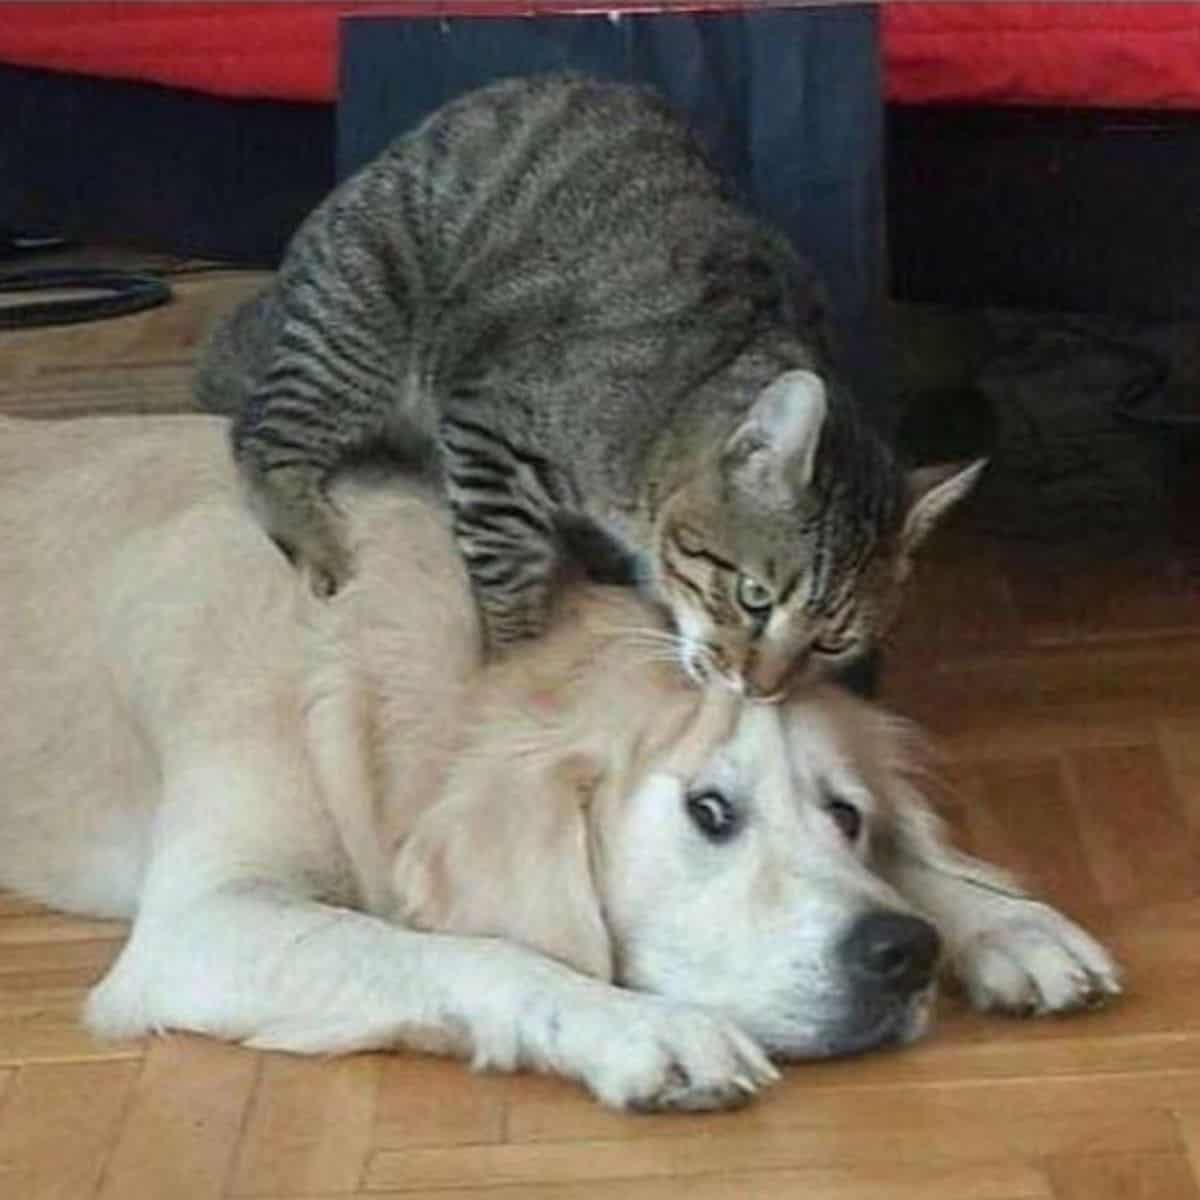 cat biting on dog